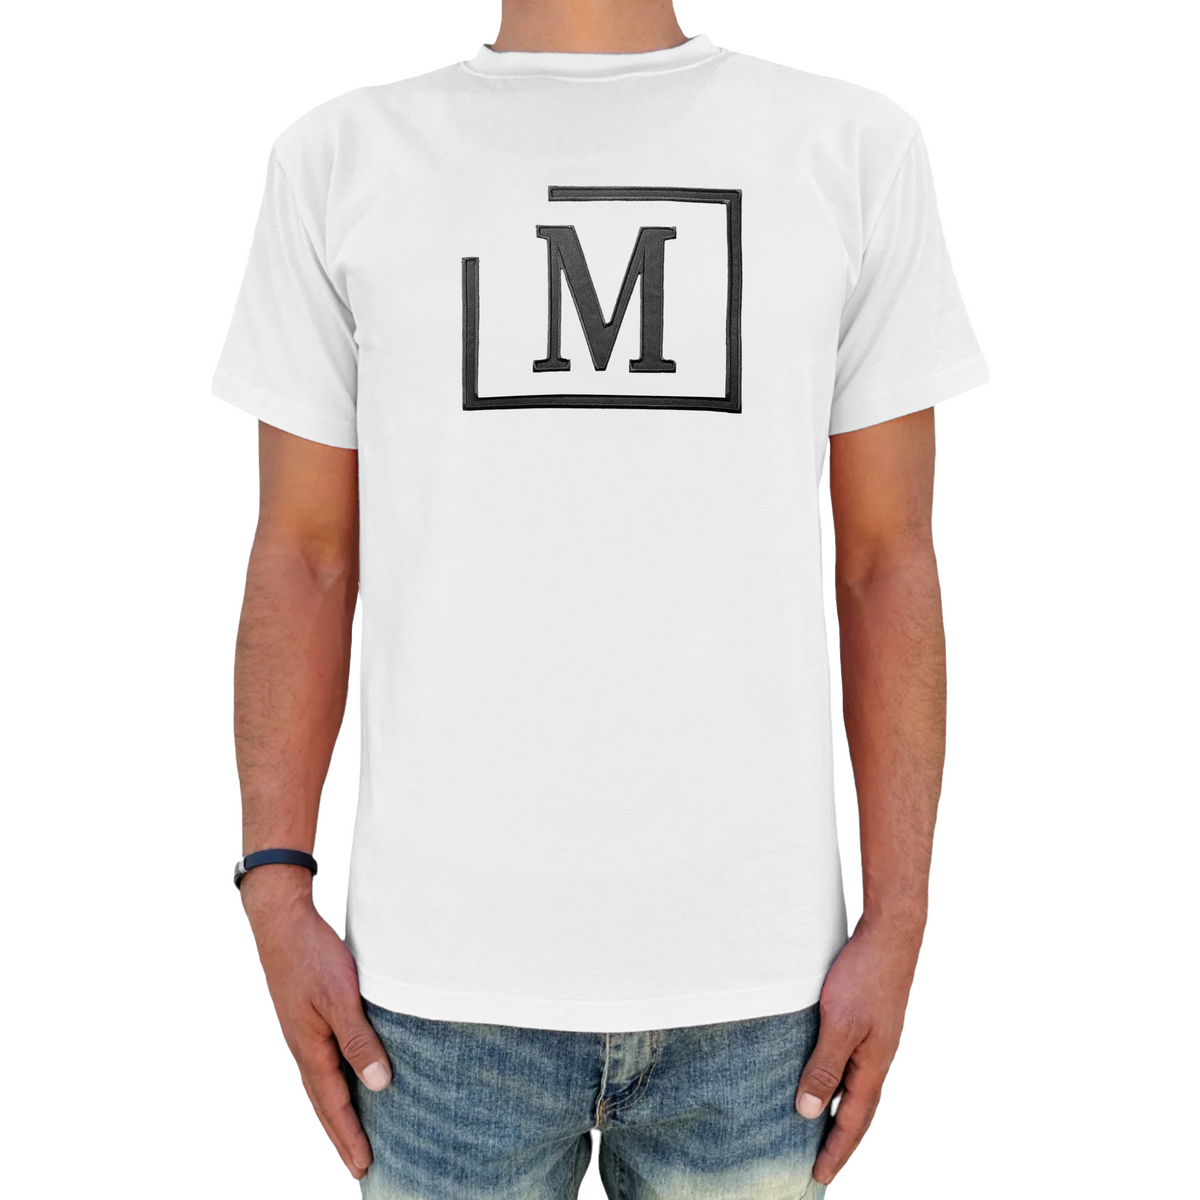 MDB Brand Men's Classic M Embroidered Logo Tee - White